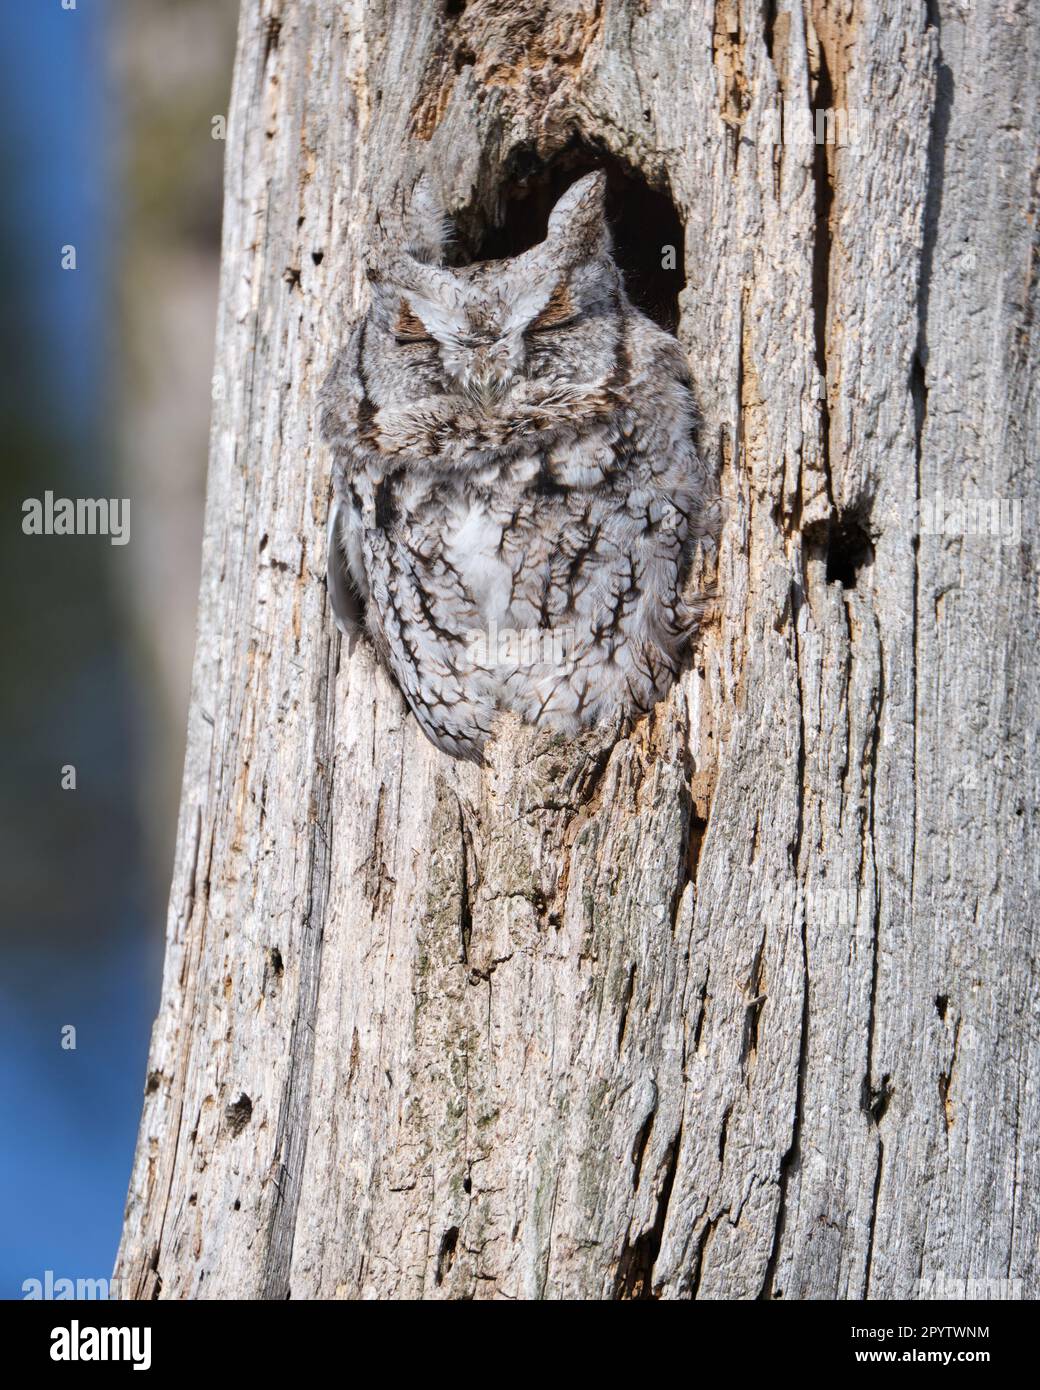 Eastern Screech Owl, sleeping in cavity of a tree Stock Photo